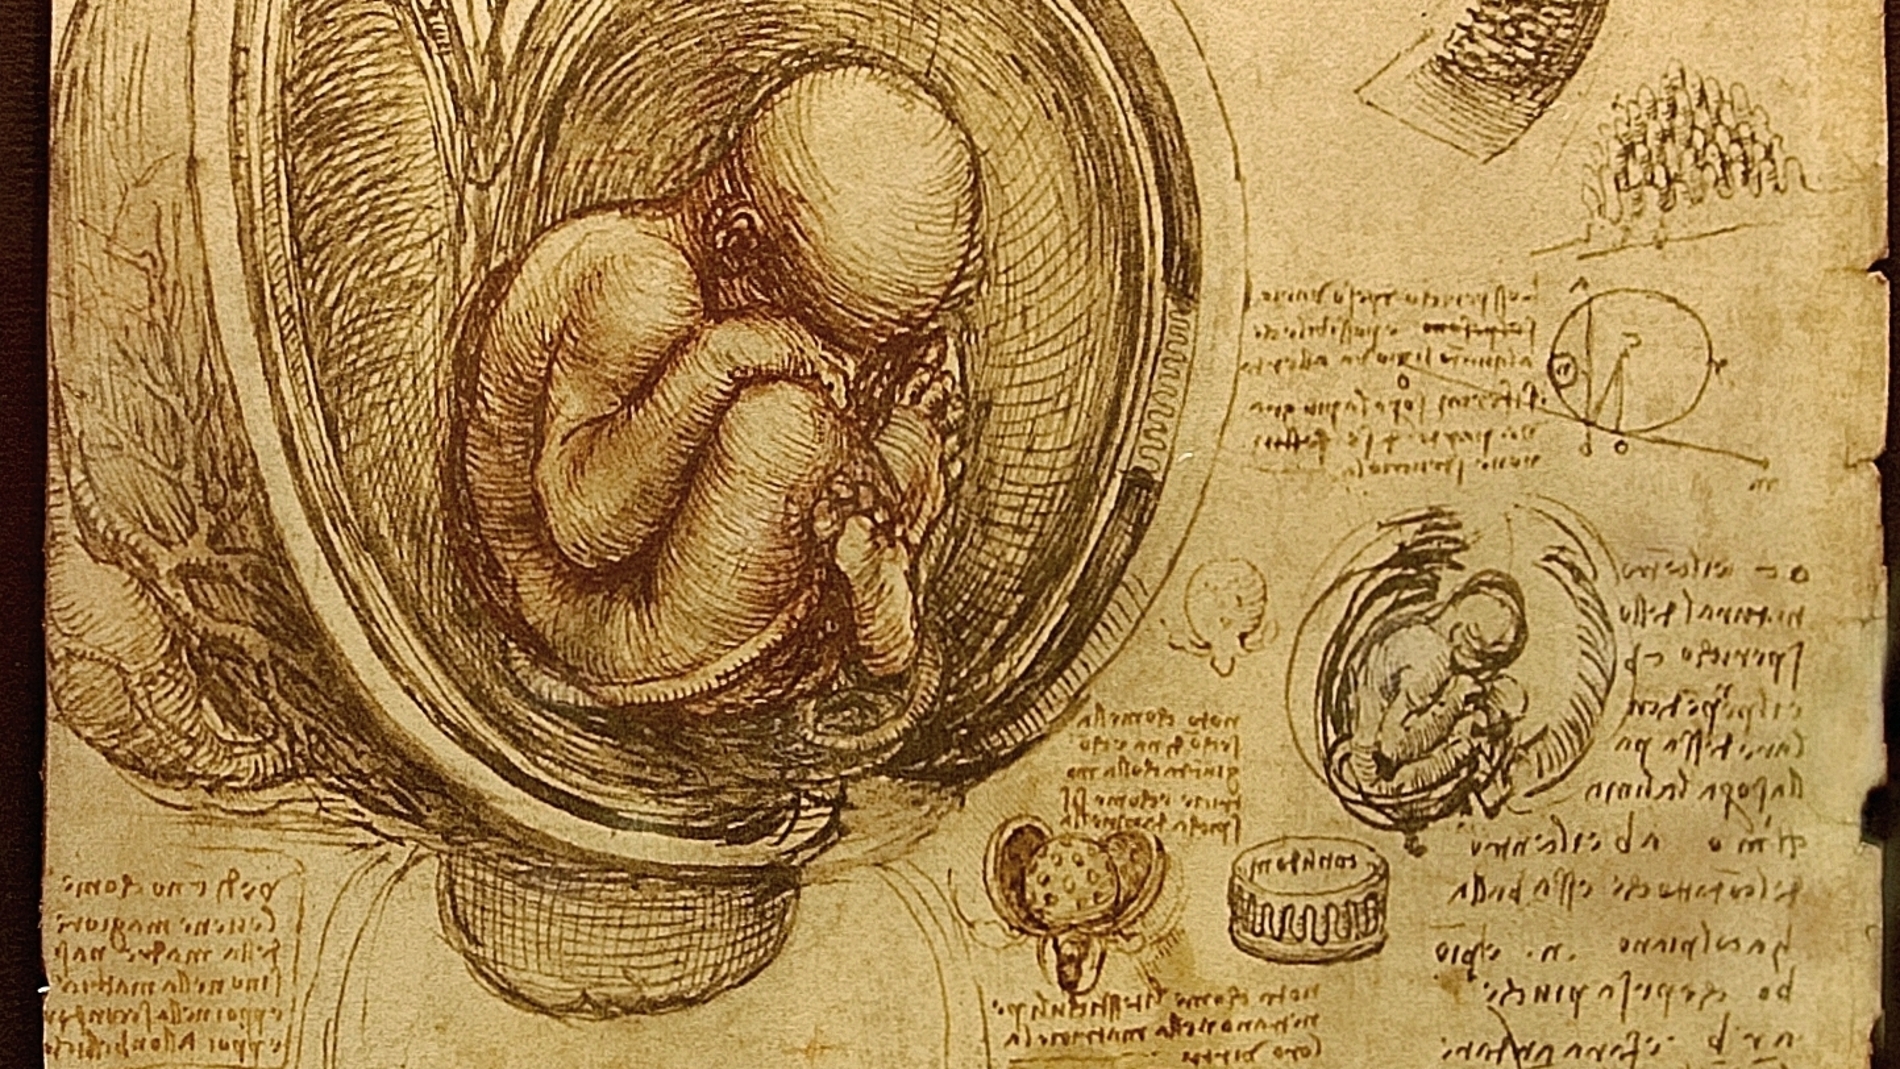 Estudios de embriones, por Leonardo da Vinci